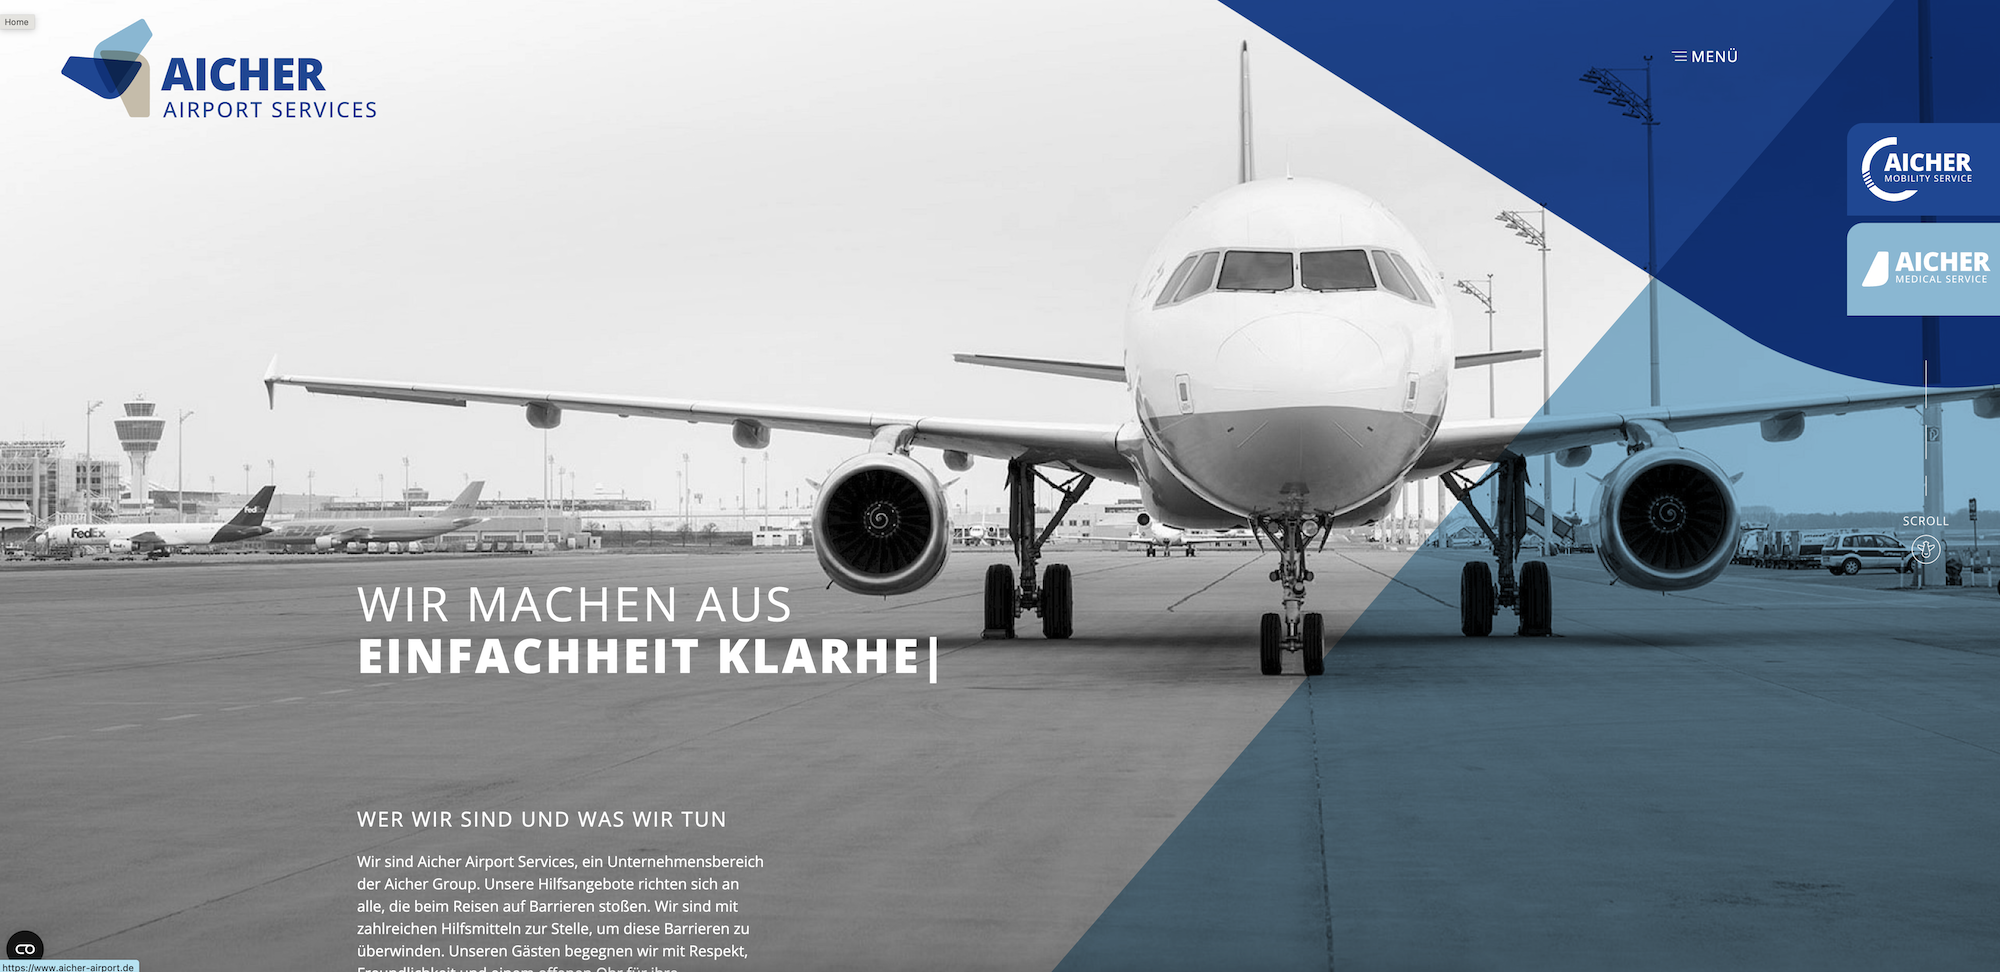 Aicher Airport Services